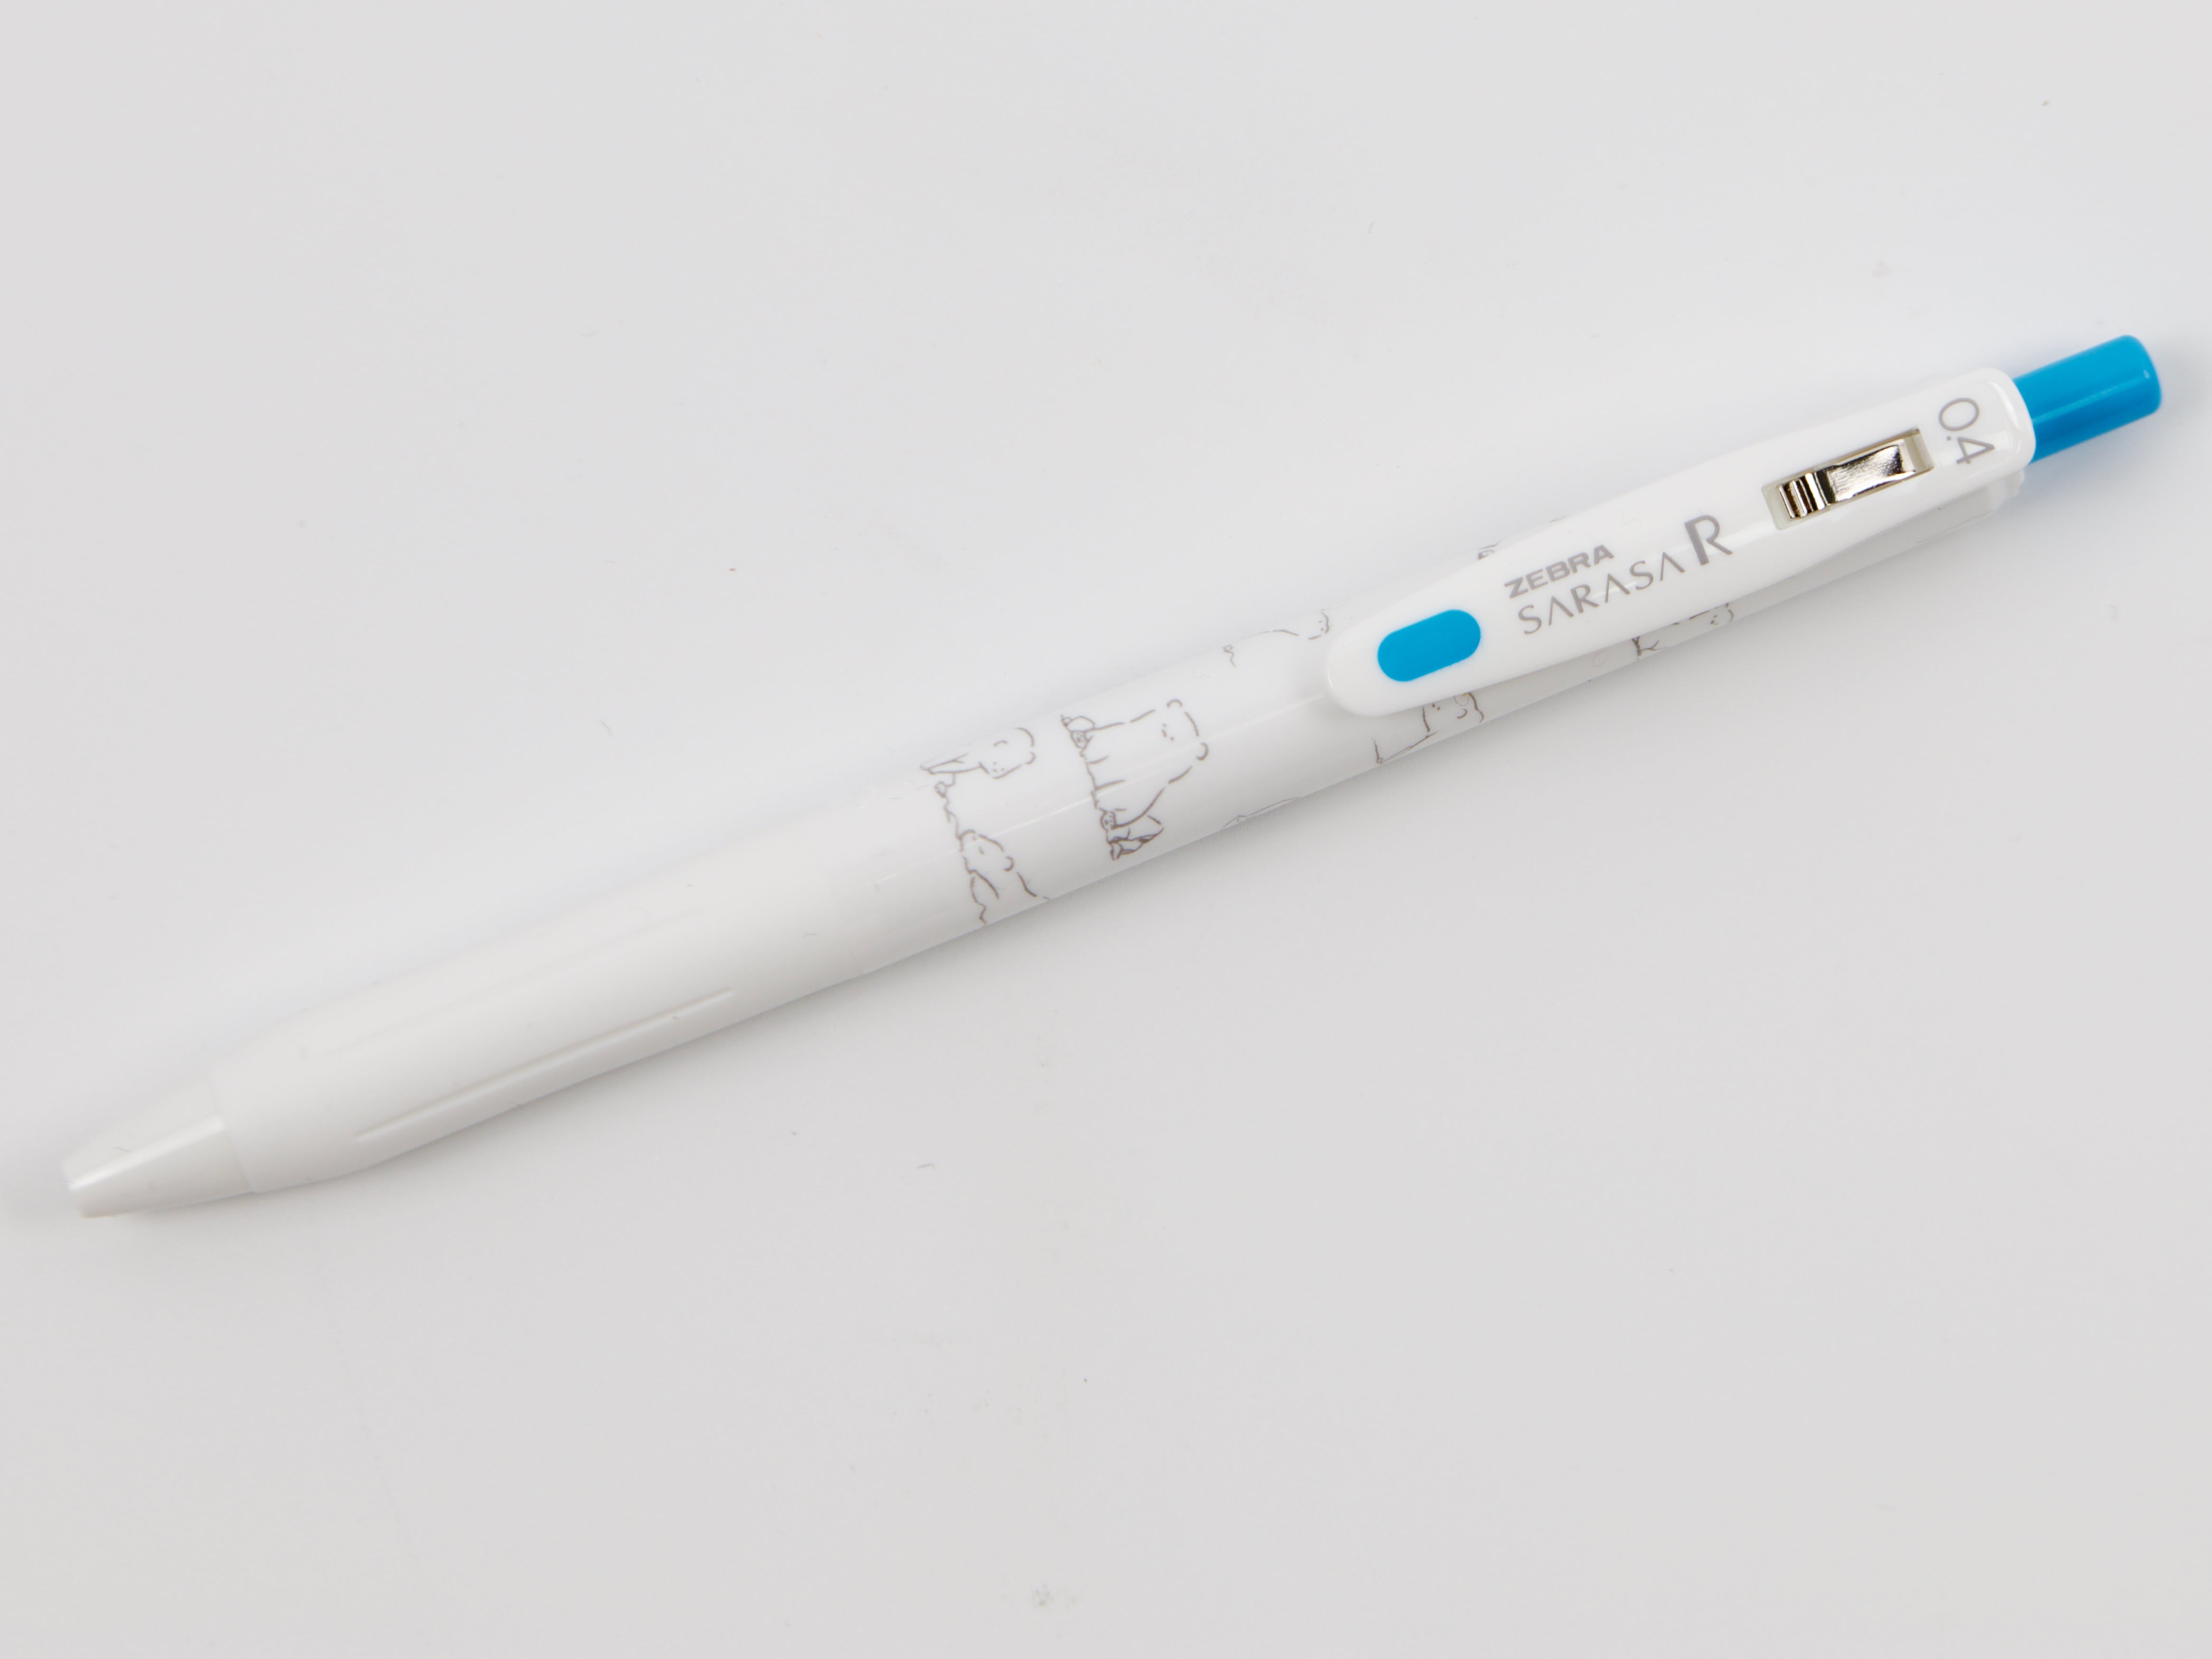 Zebra White Lines MildLiners and Sarasa R – Tokyo Pen Shop